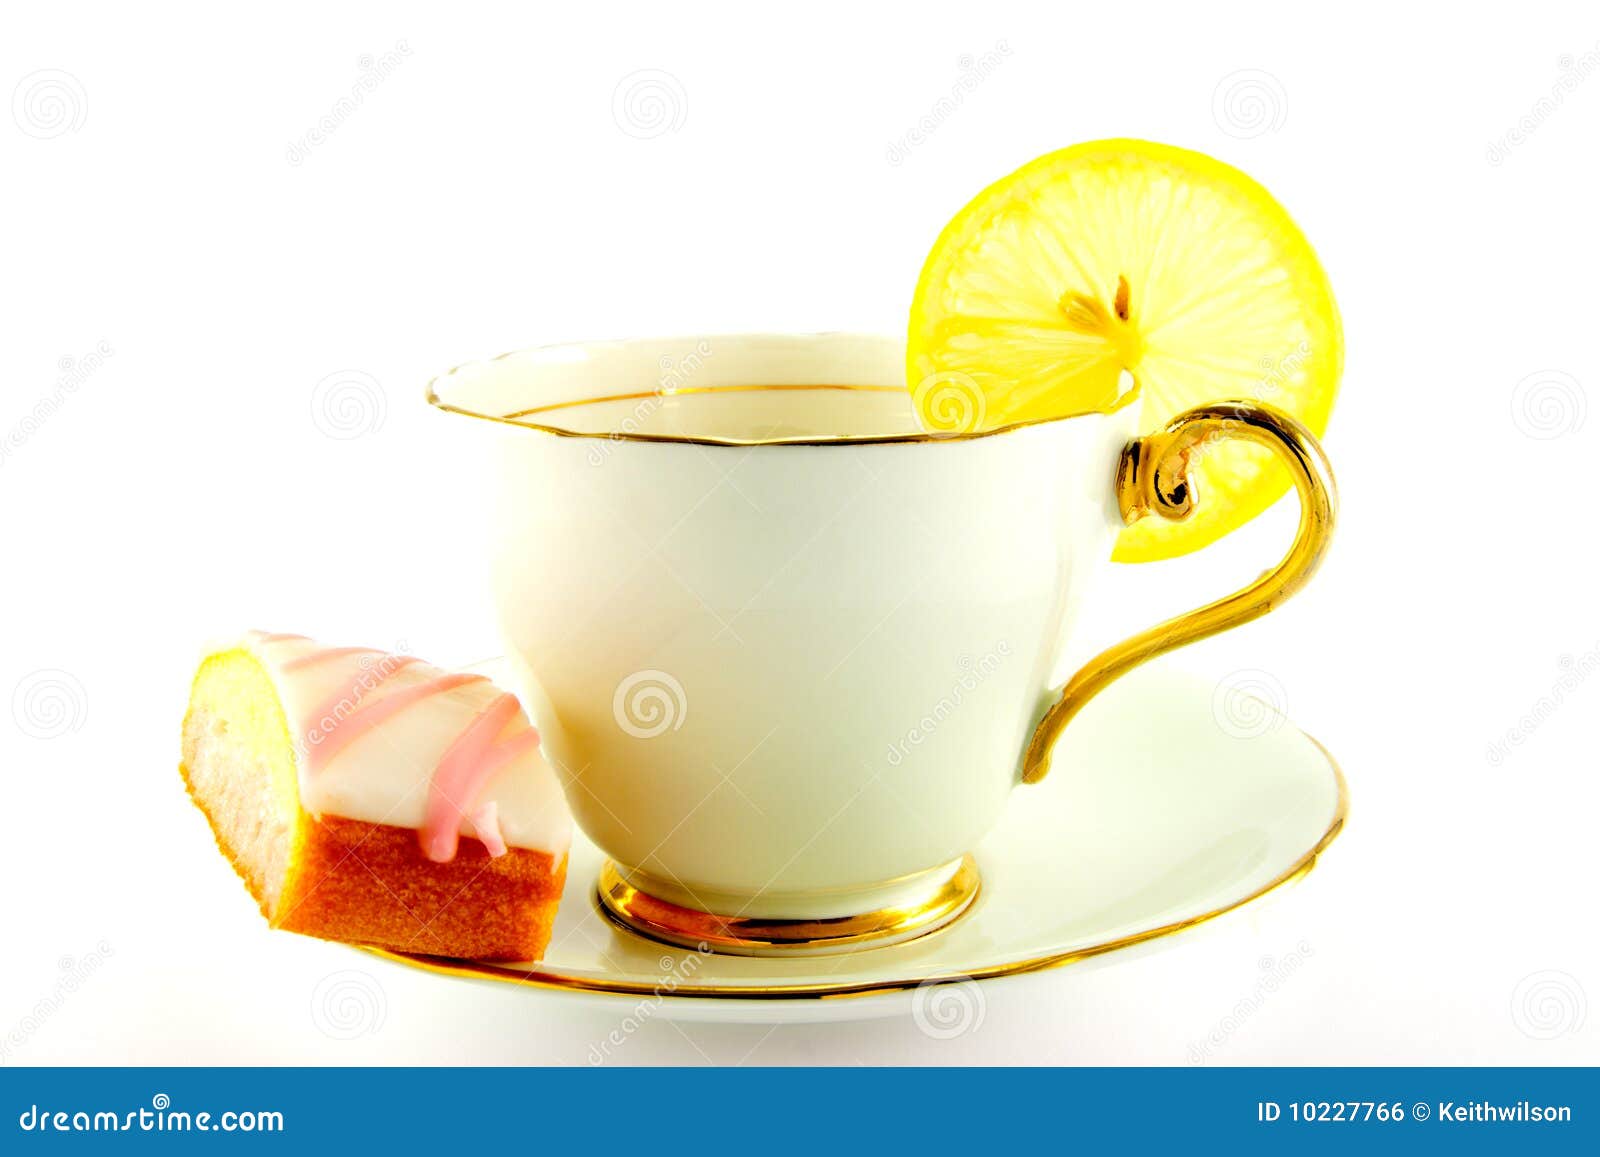 lemon cake clipart - photo #50